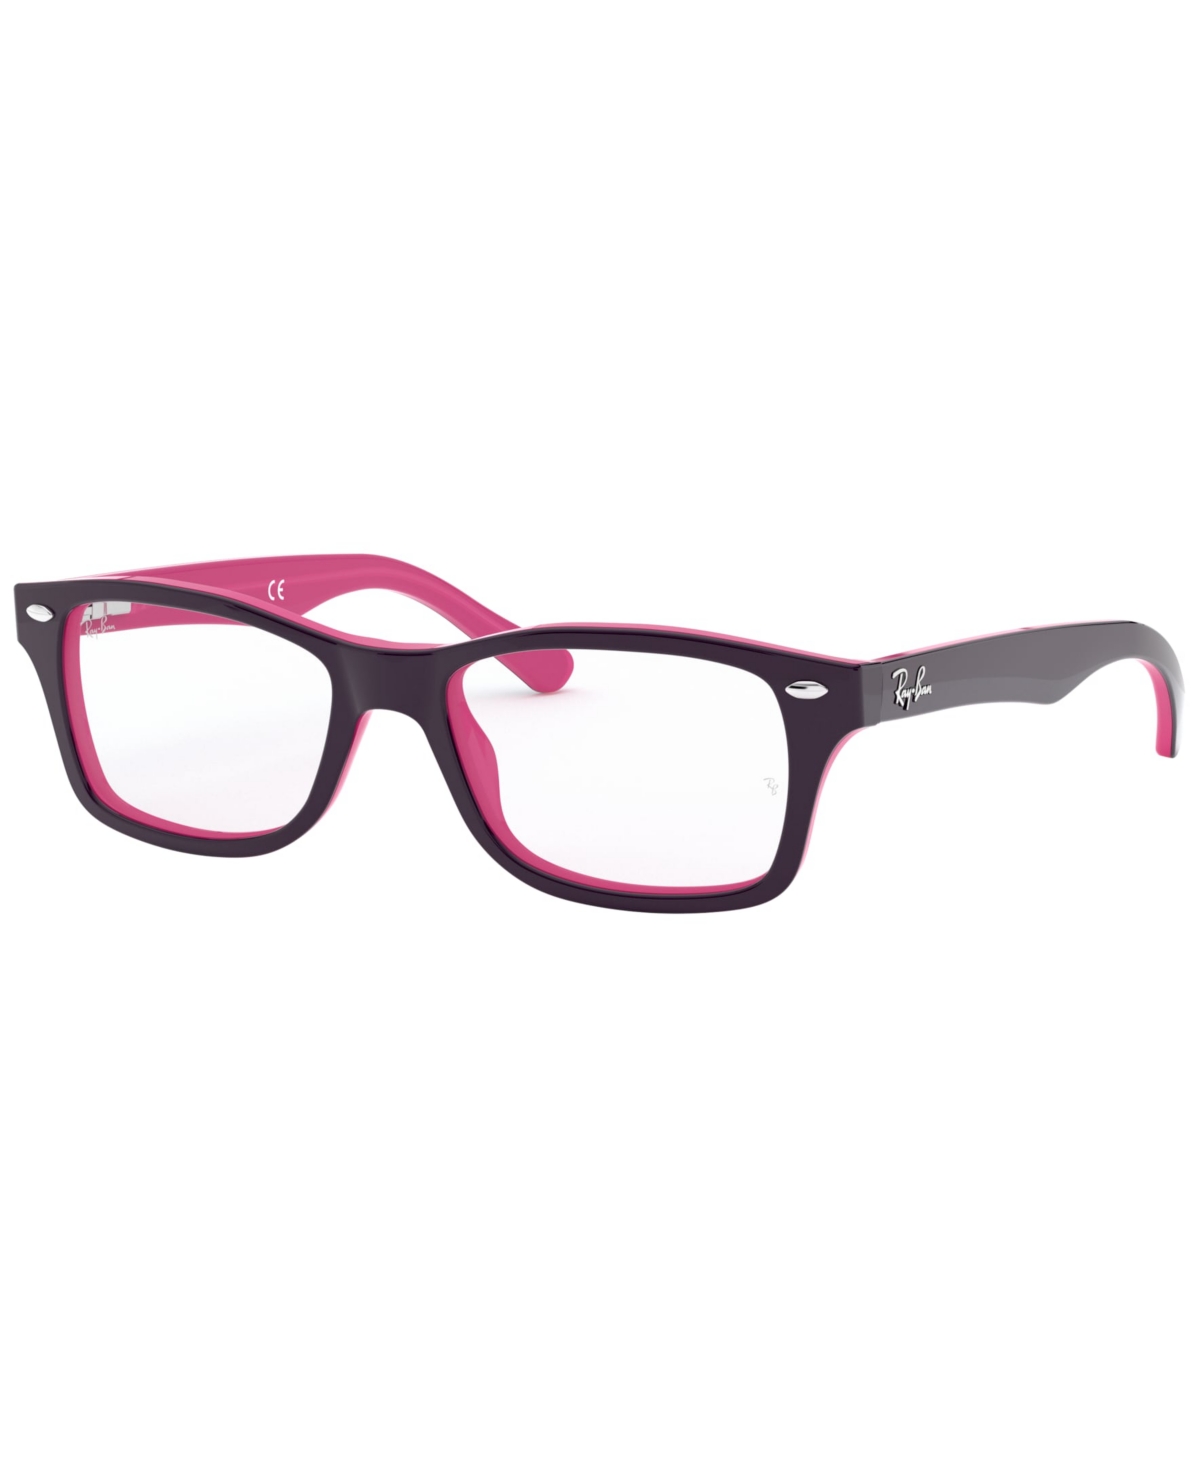 RY1531 Child Square Eyeglasses - Violet